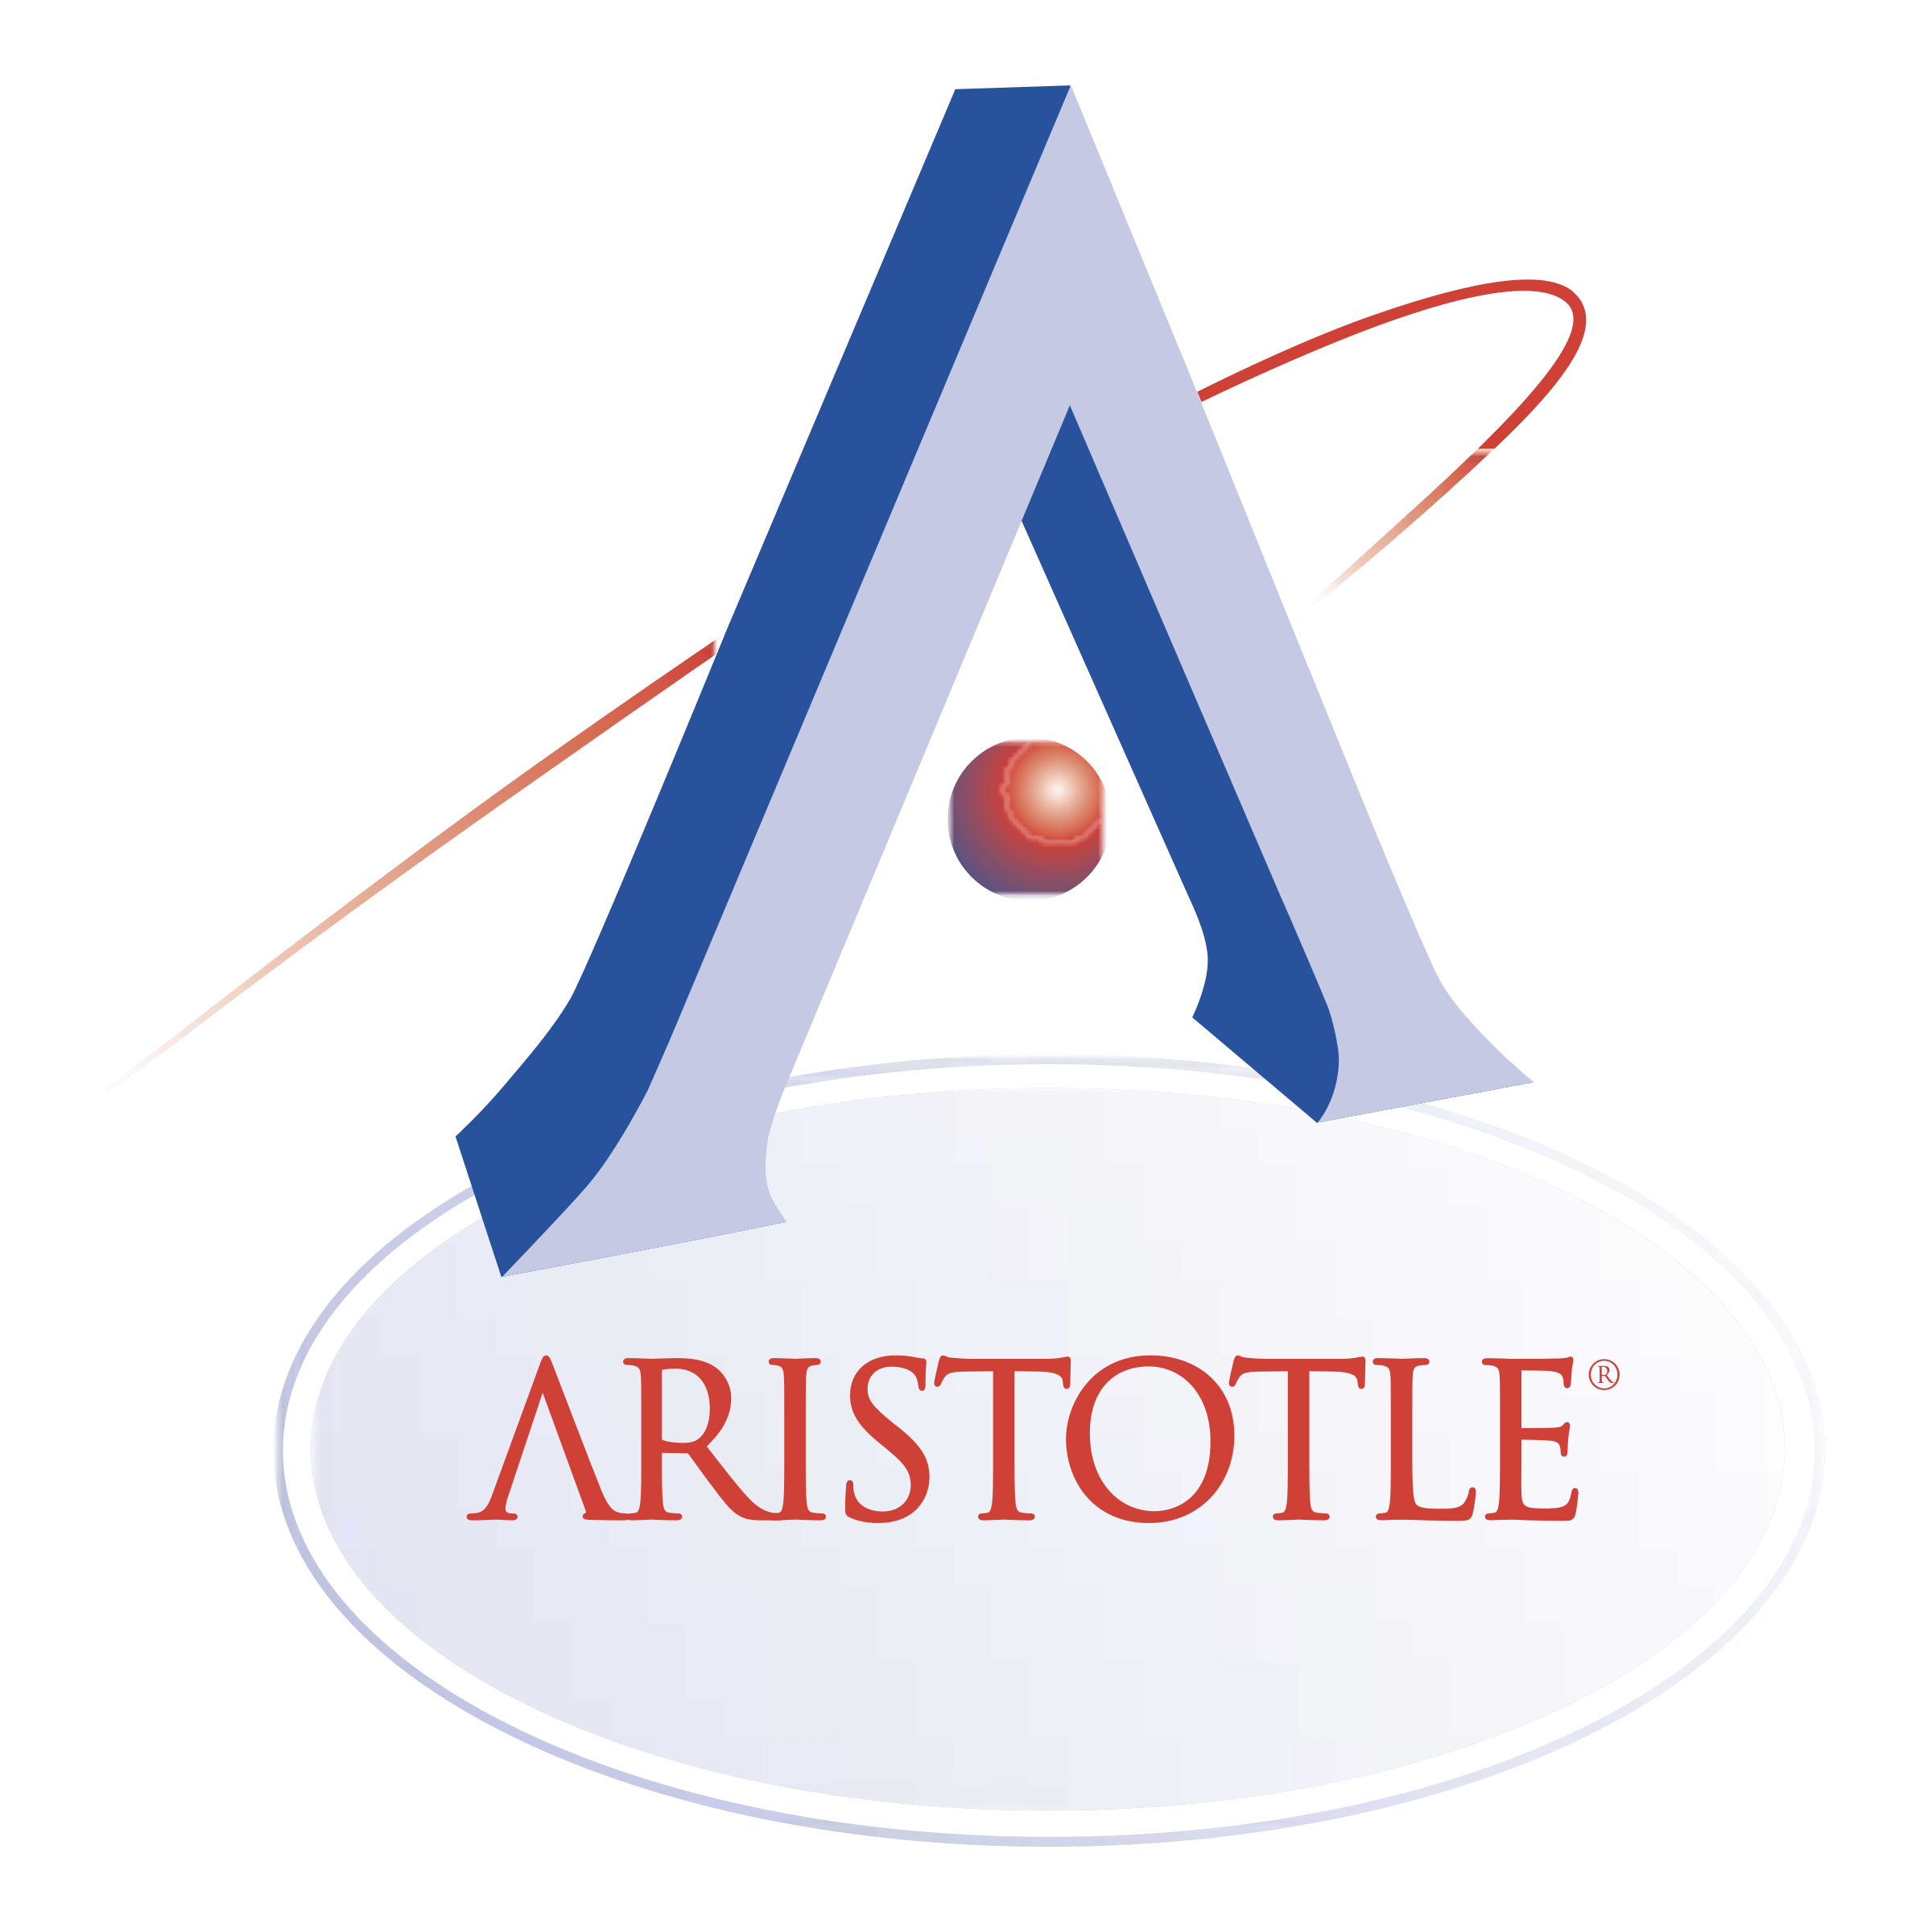 Aristotle Logo - Aristotle Logo PNG Transparent & SVG Vector